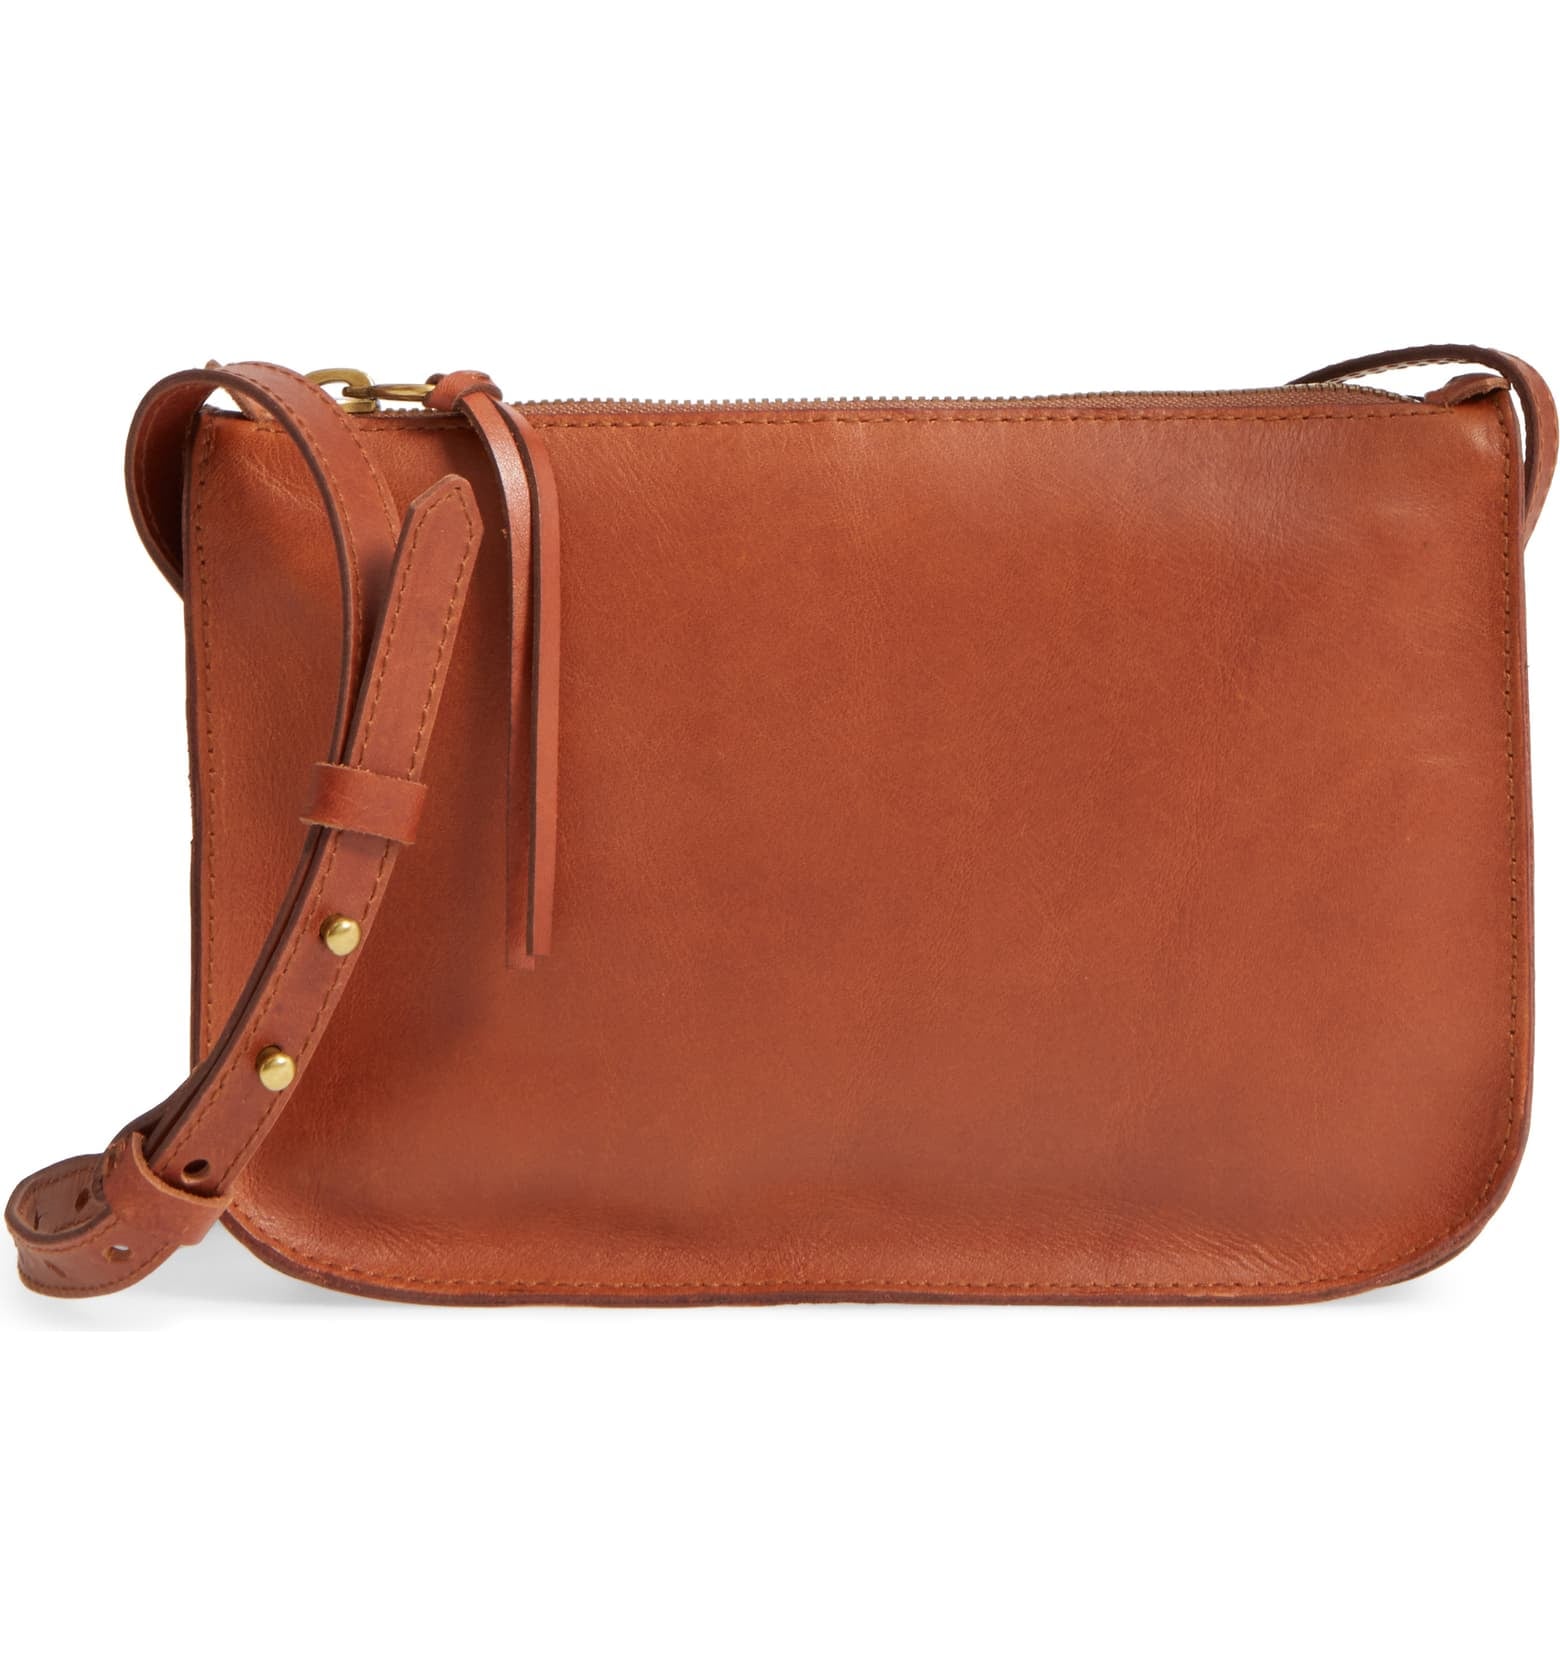 Handbags, Brand new Handbag with tag 👜 Totally unused